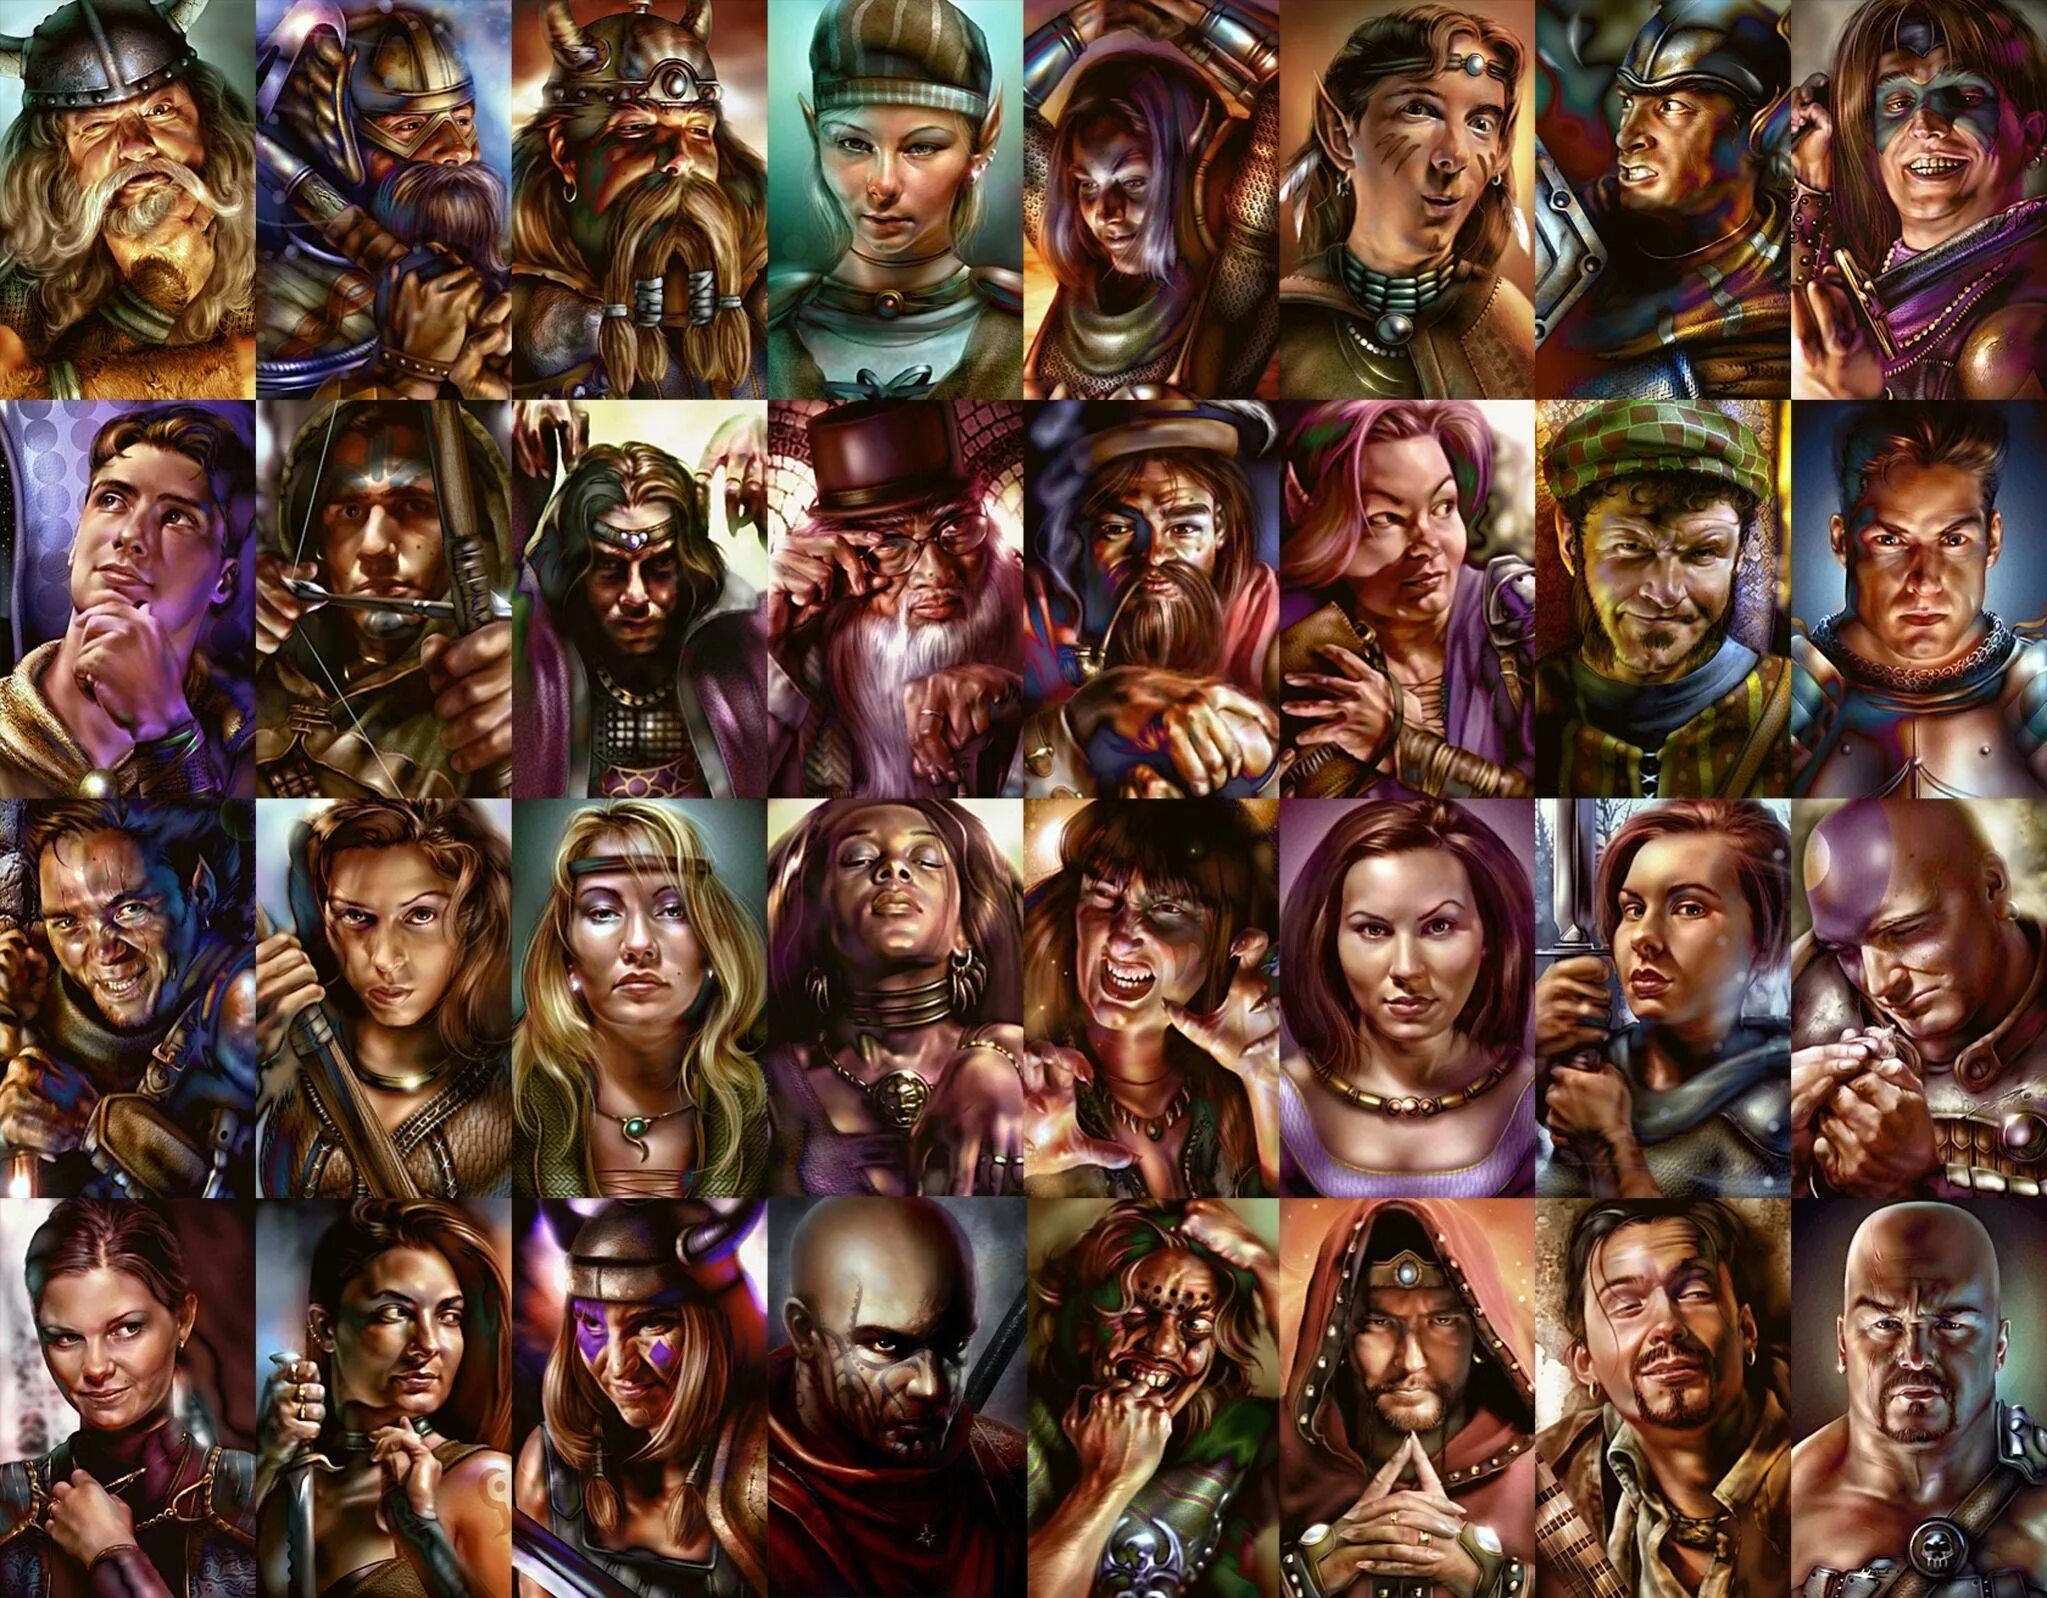 Eldest forum. Baldur's Gate 2 портреты персонажей. Балдур гейт 3 персонажи. Балдурс гейт 2 портреты. Балдурс гейт 1 персонажи.